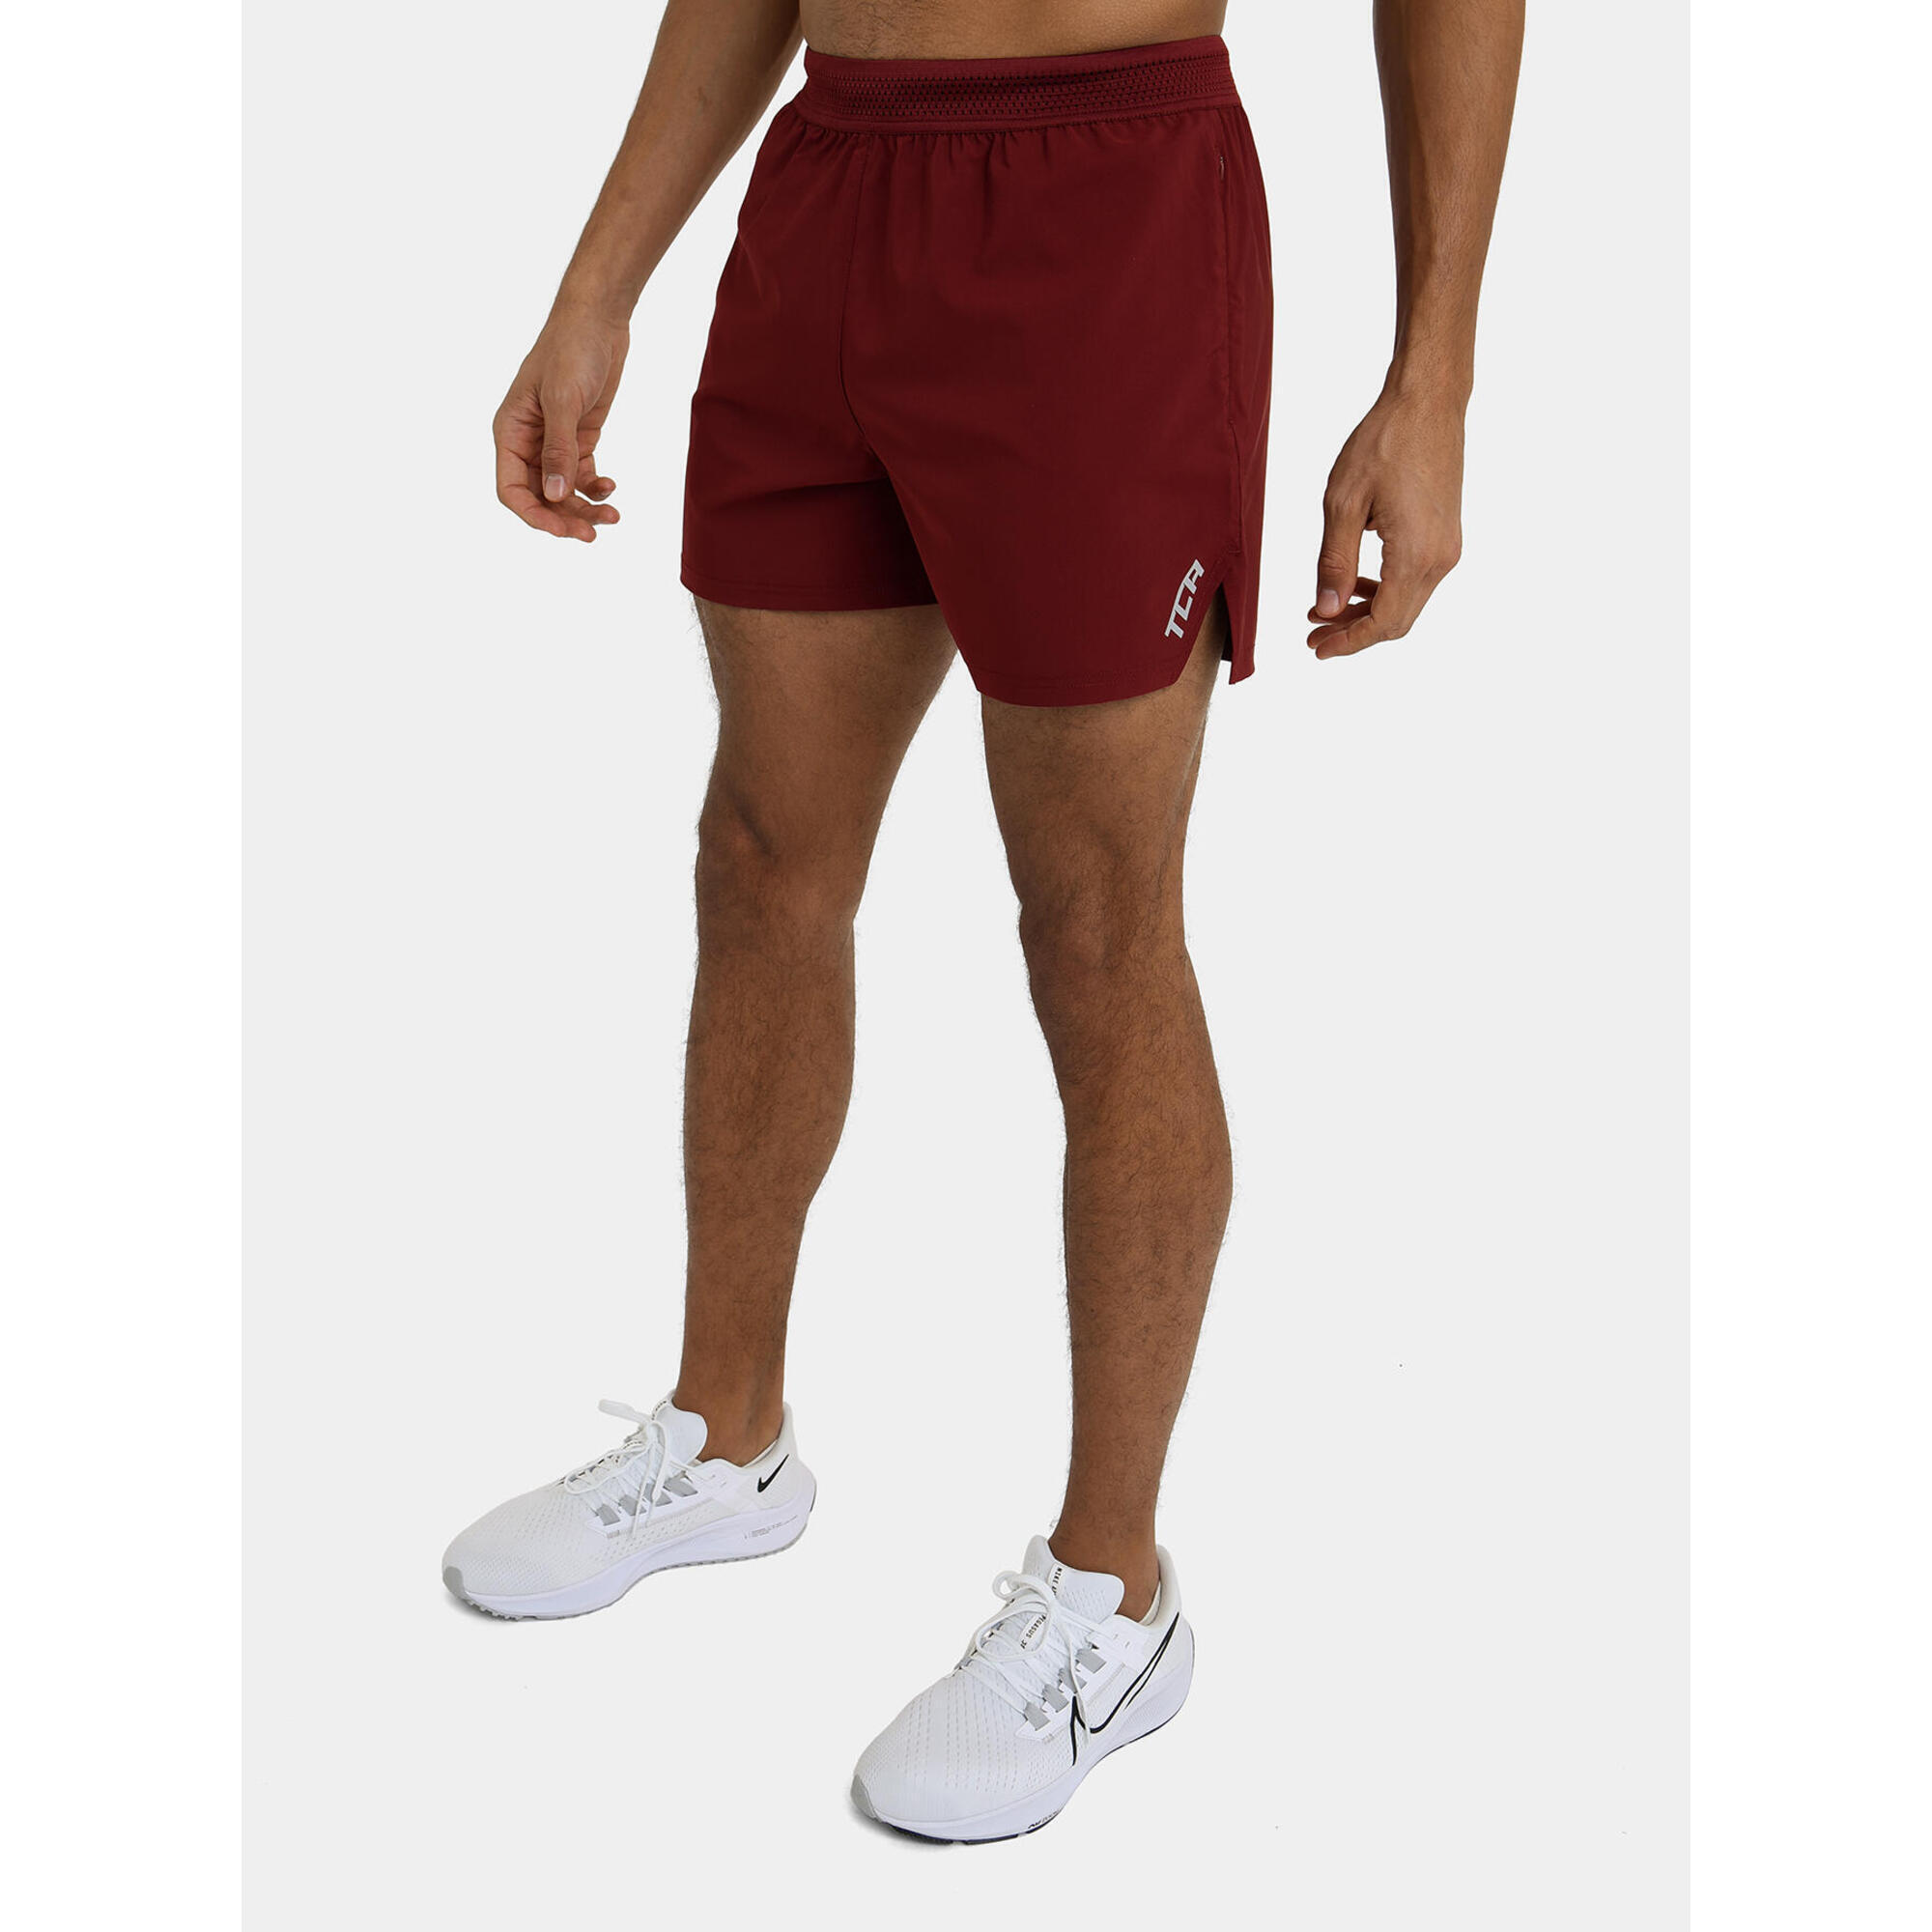 Men's Flyweight Running Shorts with Zipped Pockets - Maroon 1/5